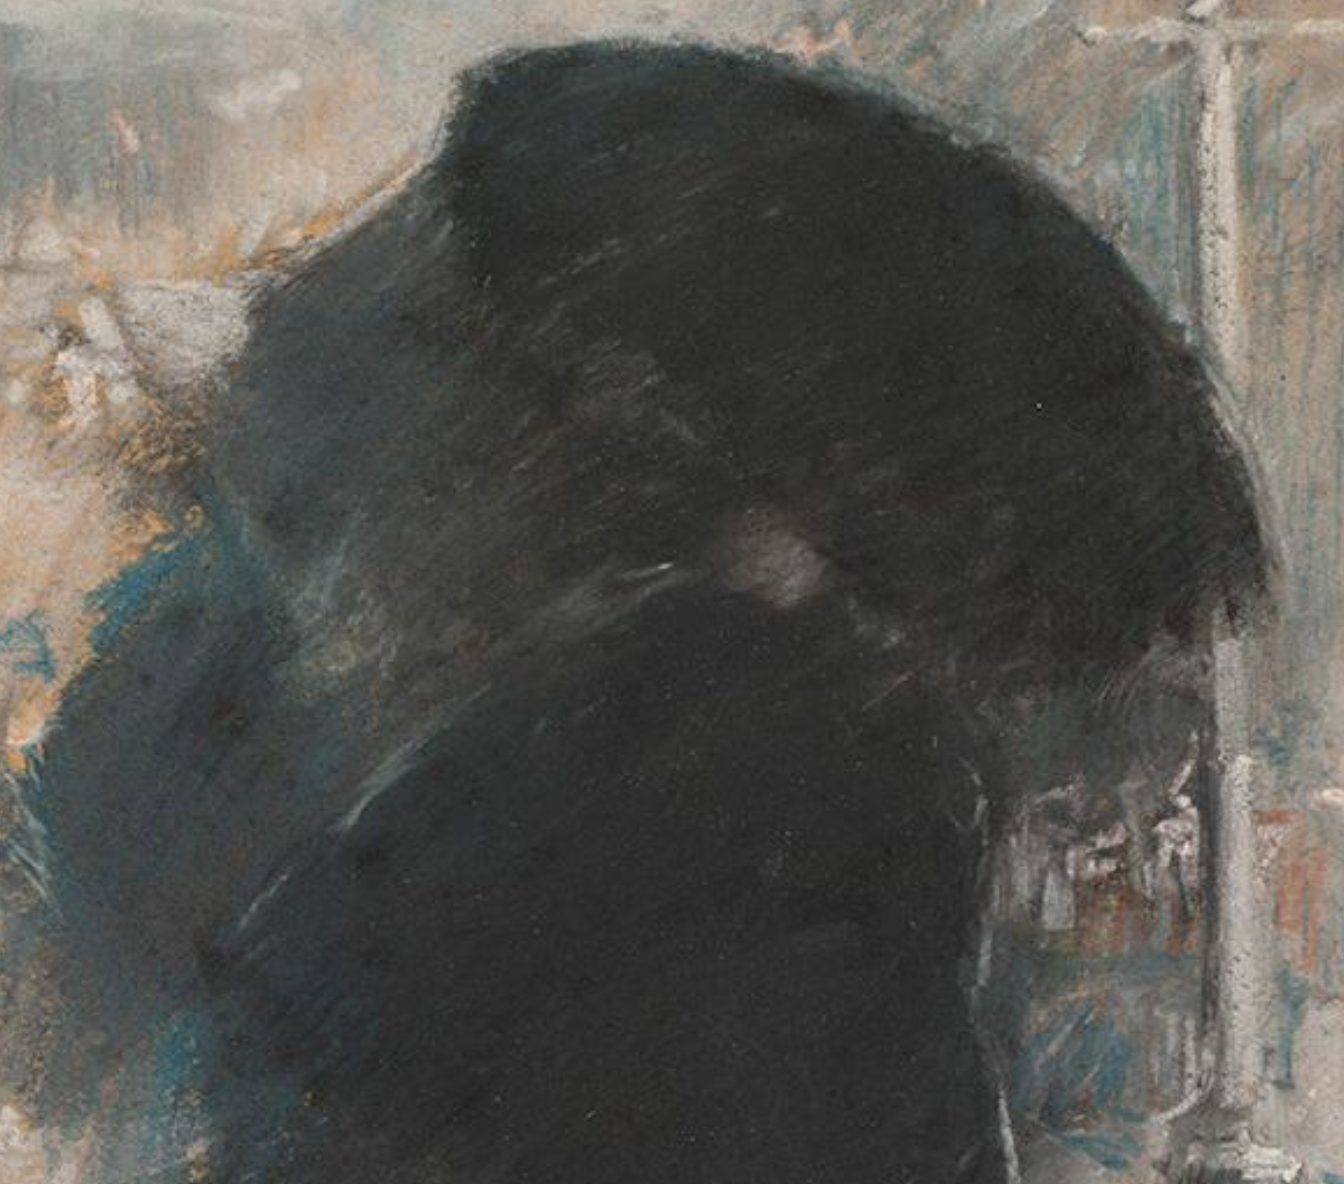 Childe Hassam, "A New York Blizzard," c.1890, pastel on wood pulp cardboard, 35 x 24 Cm (13 3/4 x 9 7/16 in), Isabella Stewart Gardner Museum, Boston, Massachusetts, USA.- detail of black coat and umbrella